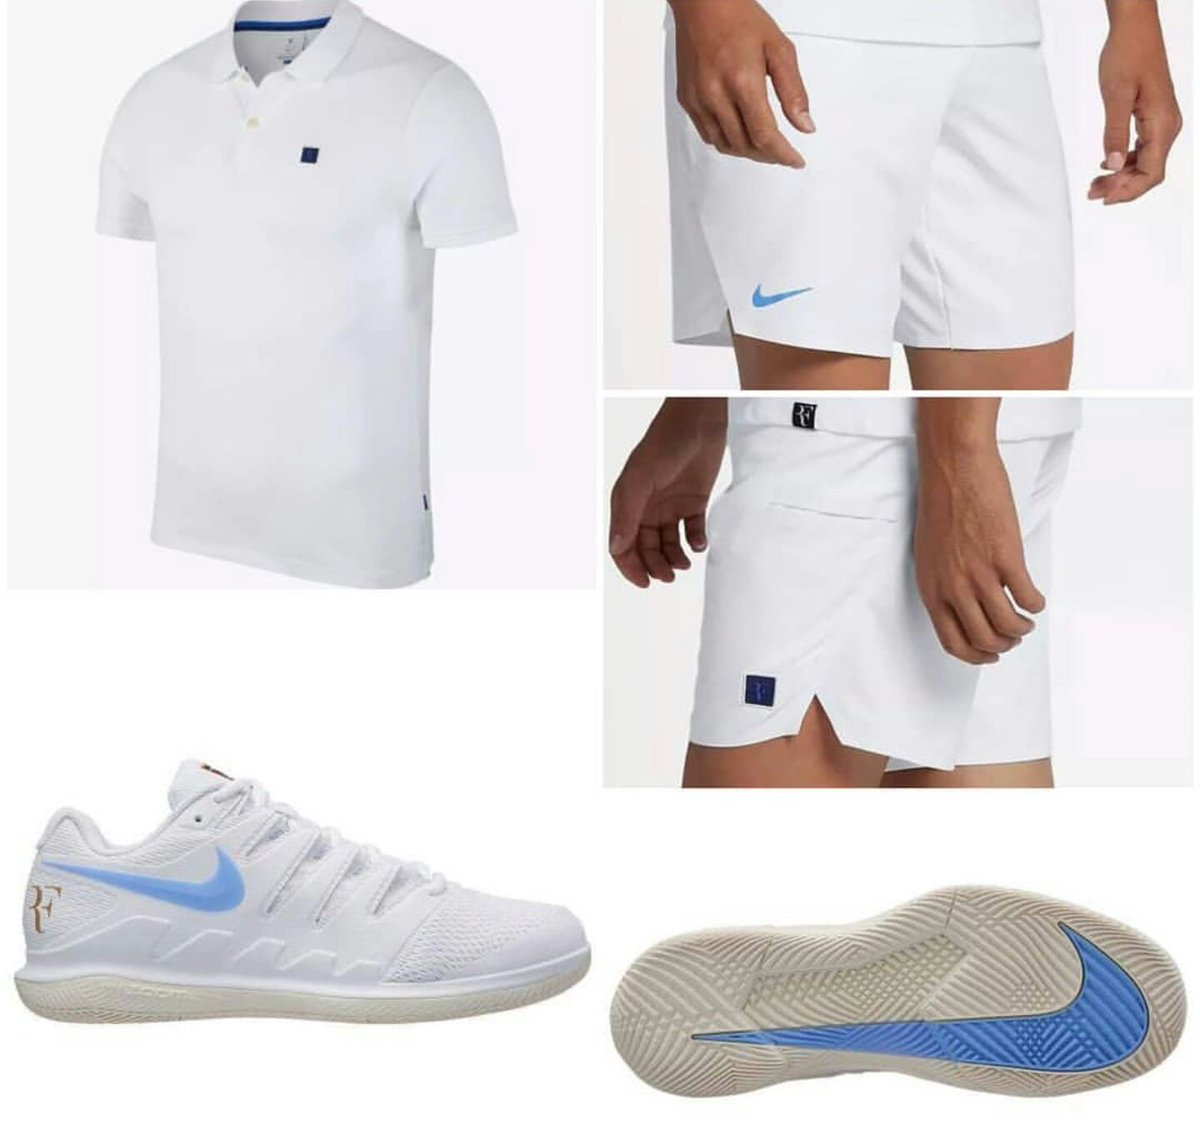 Revealed: Roger Federer's 2018 Wimbledon outfit (Pics Inside)